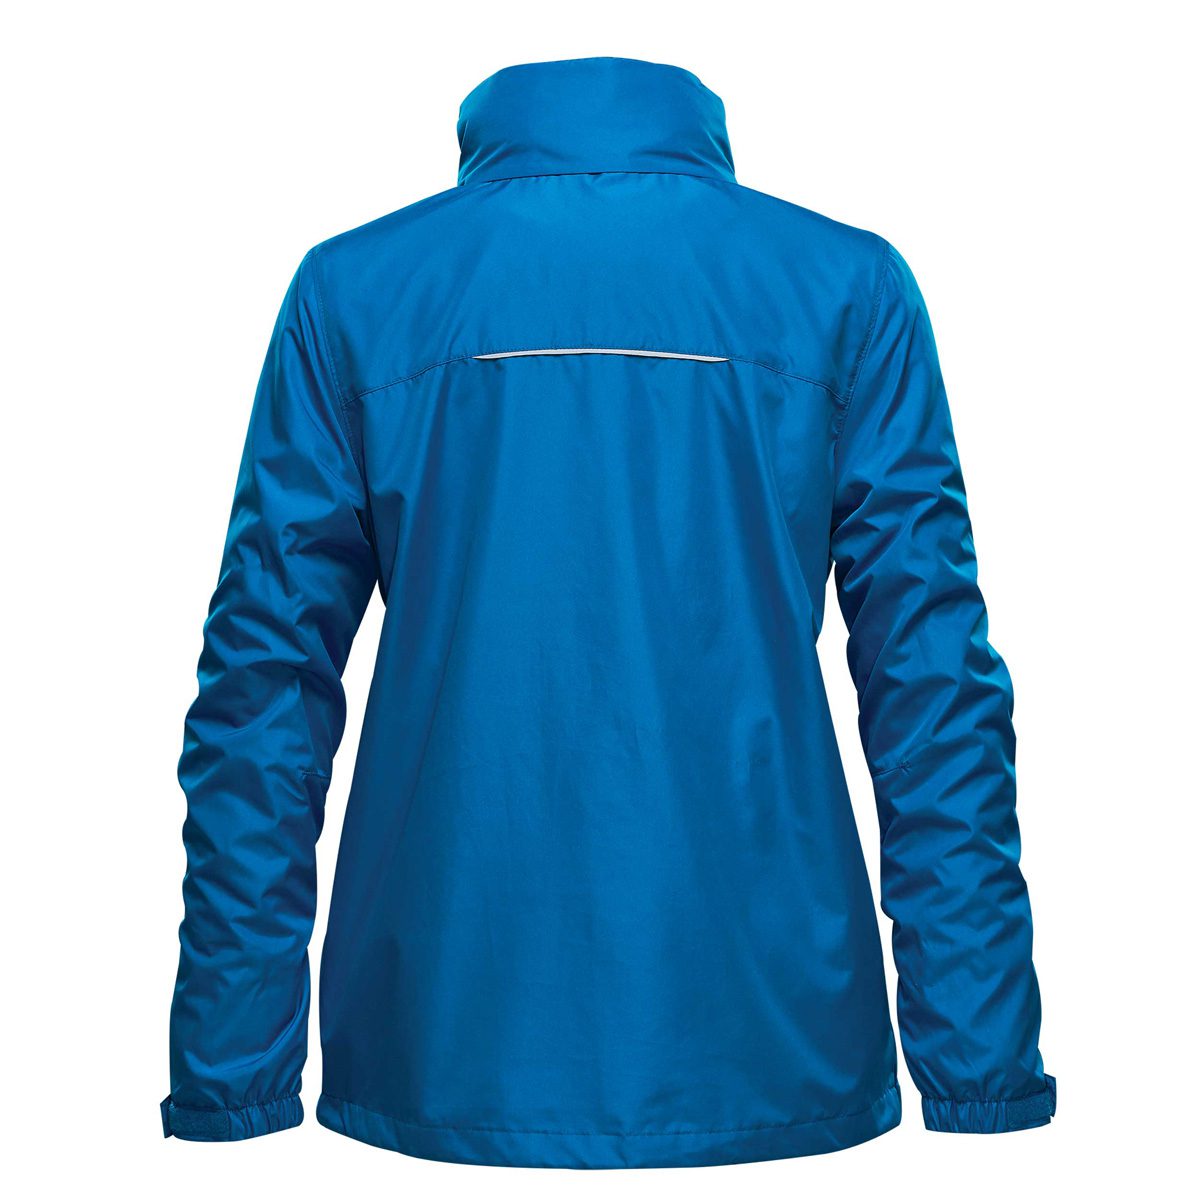 Stormtech Women's Nautilus 3-In-1 System Jacket #KXR-2WLE Azure Blue Back